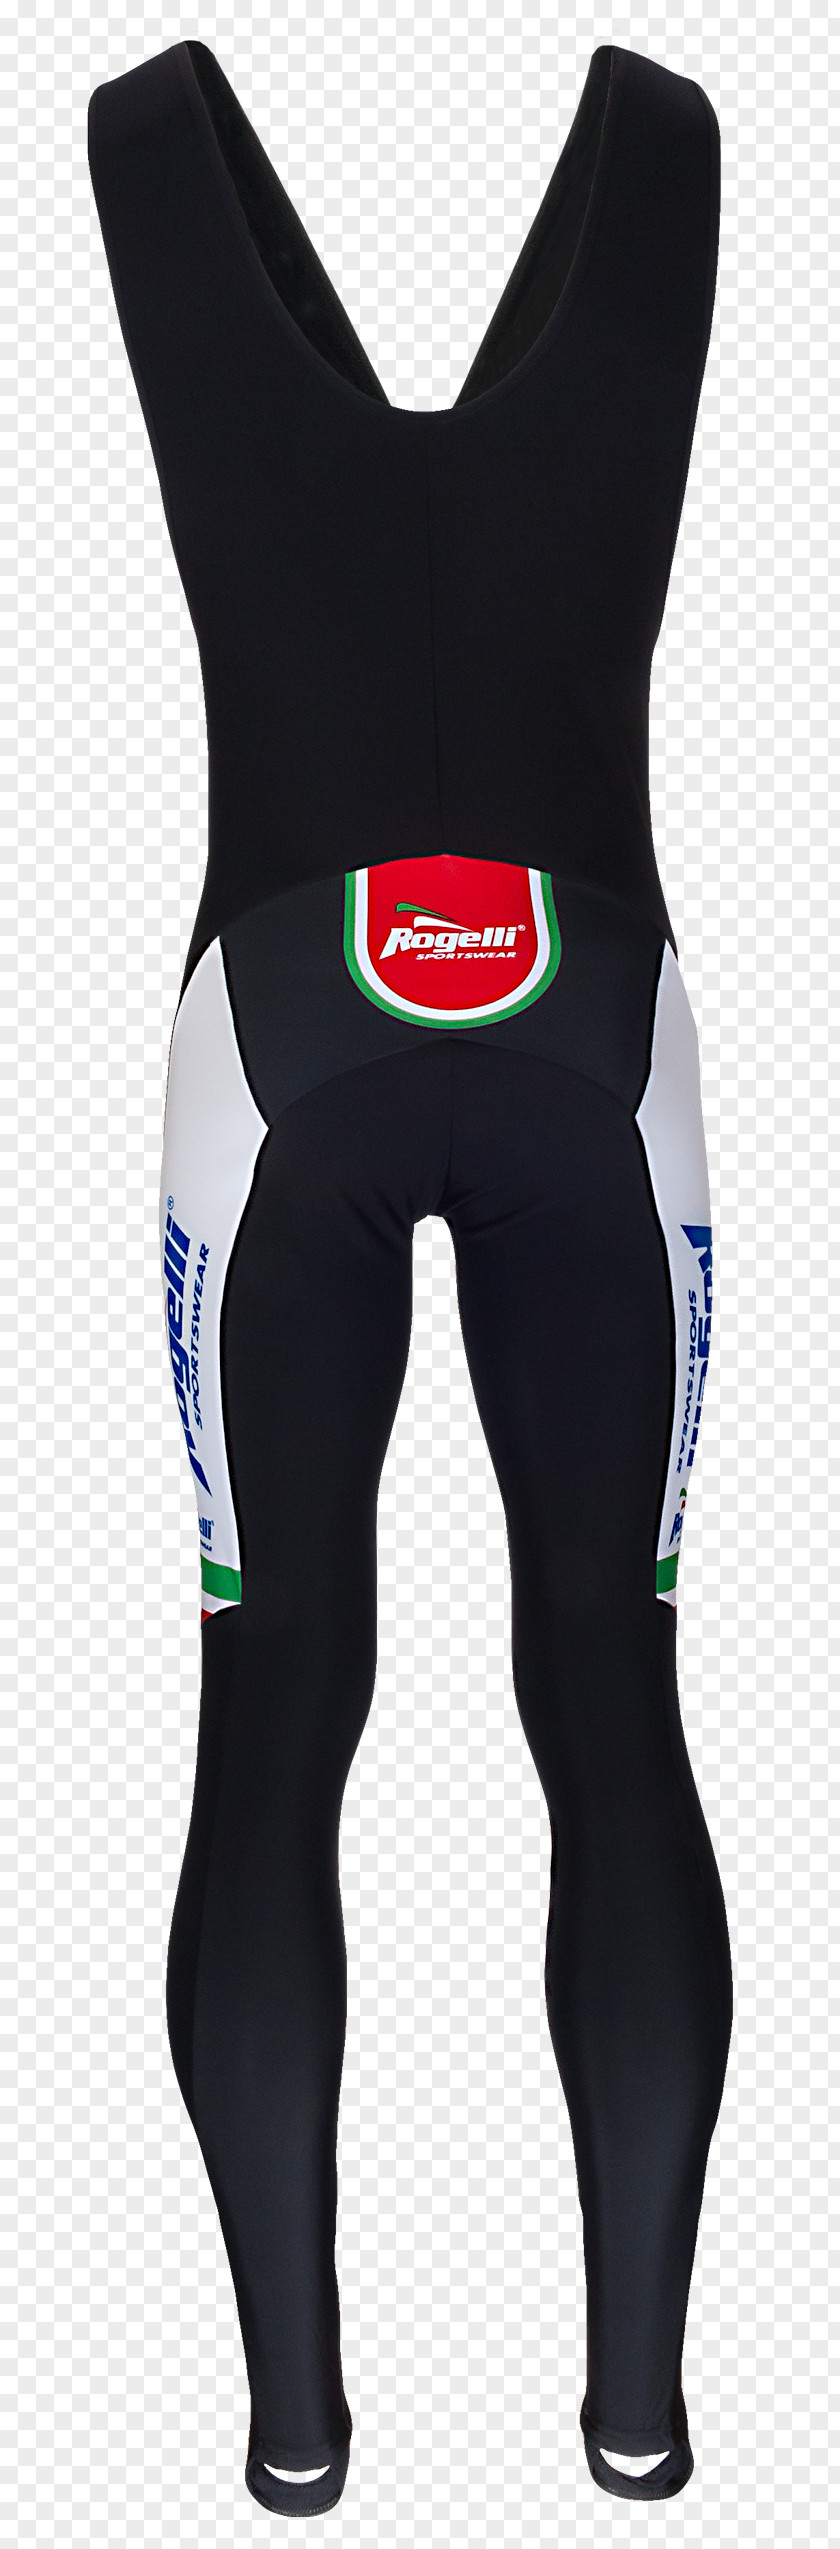 Design Wetsuit Uniform Tights PNG